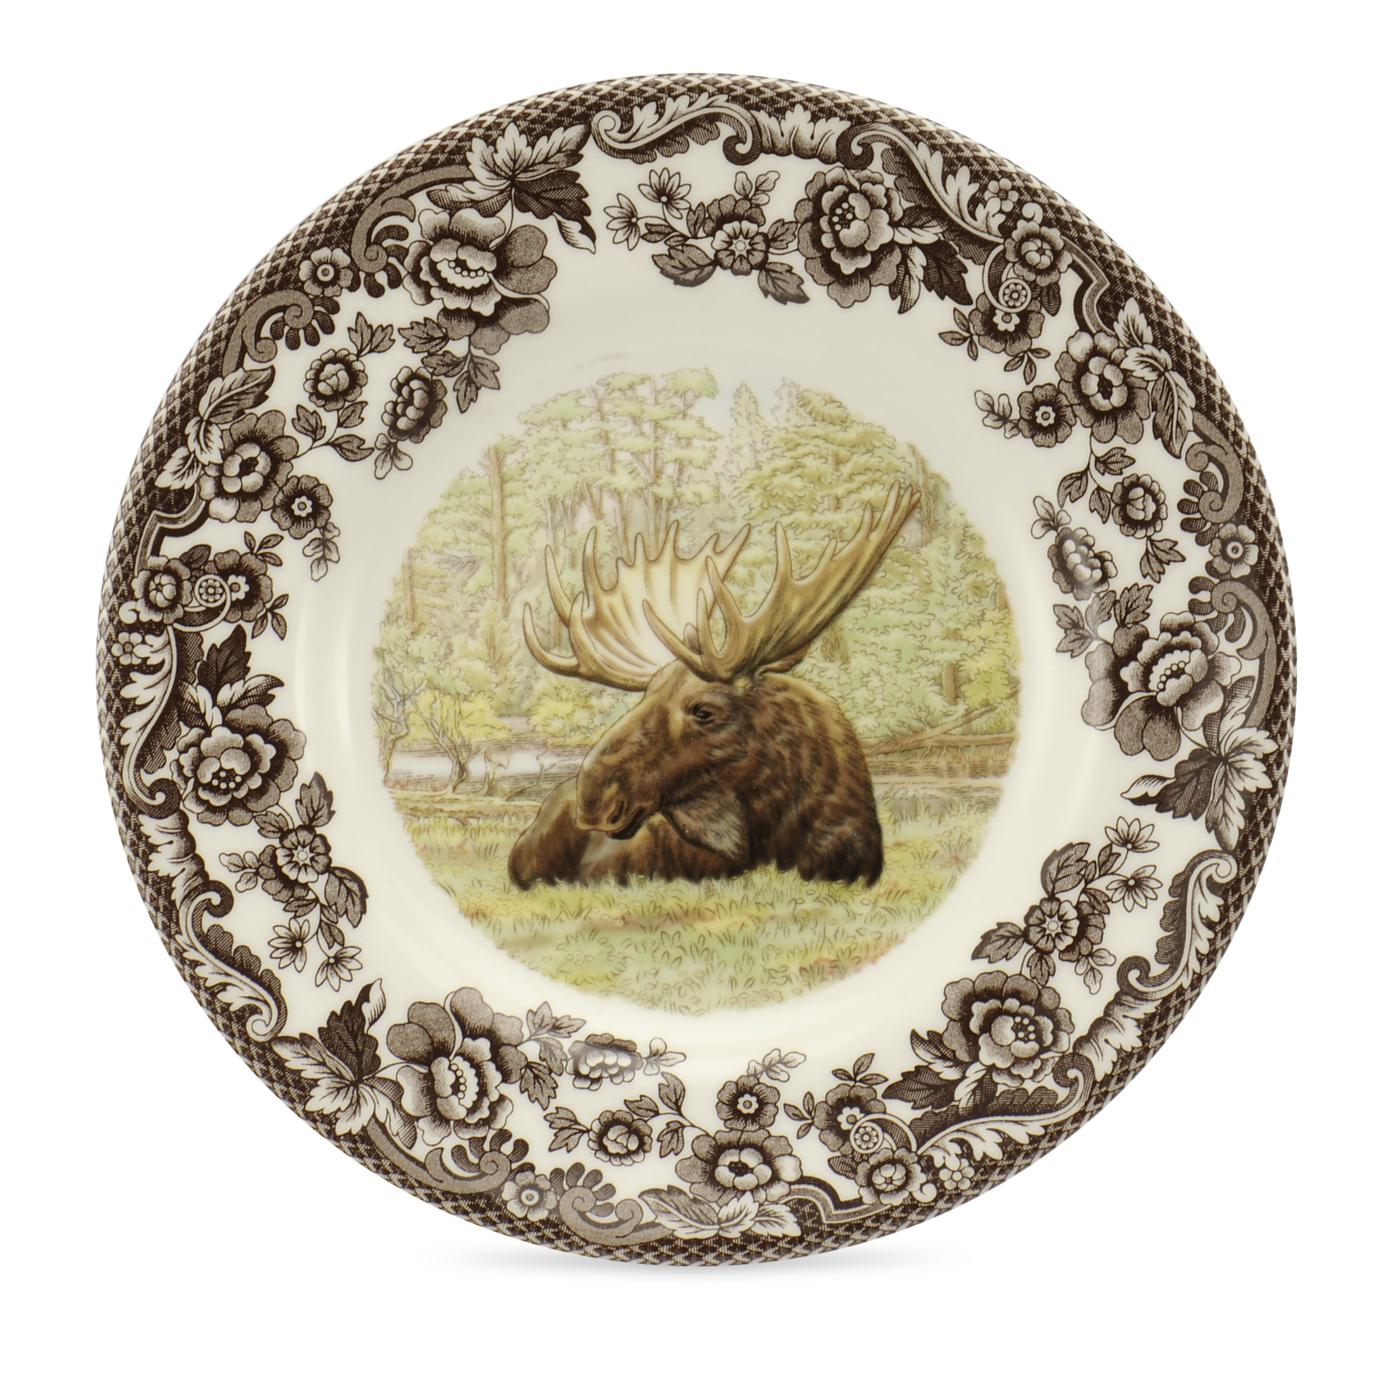 Spode WOODLAND Moose Bread & Butter Plate 9561863 